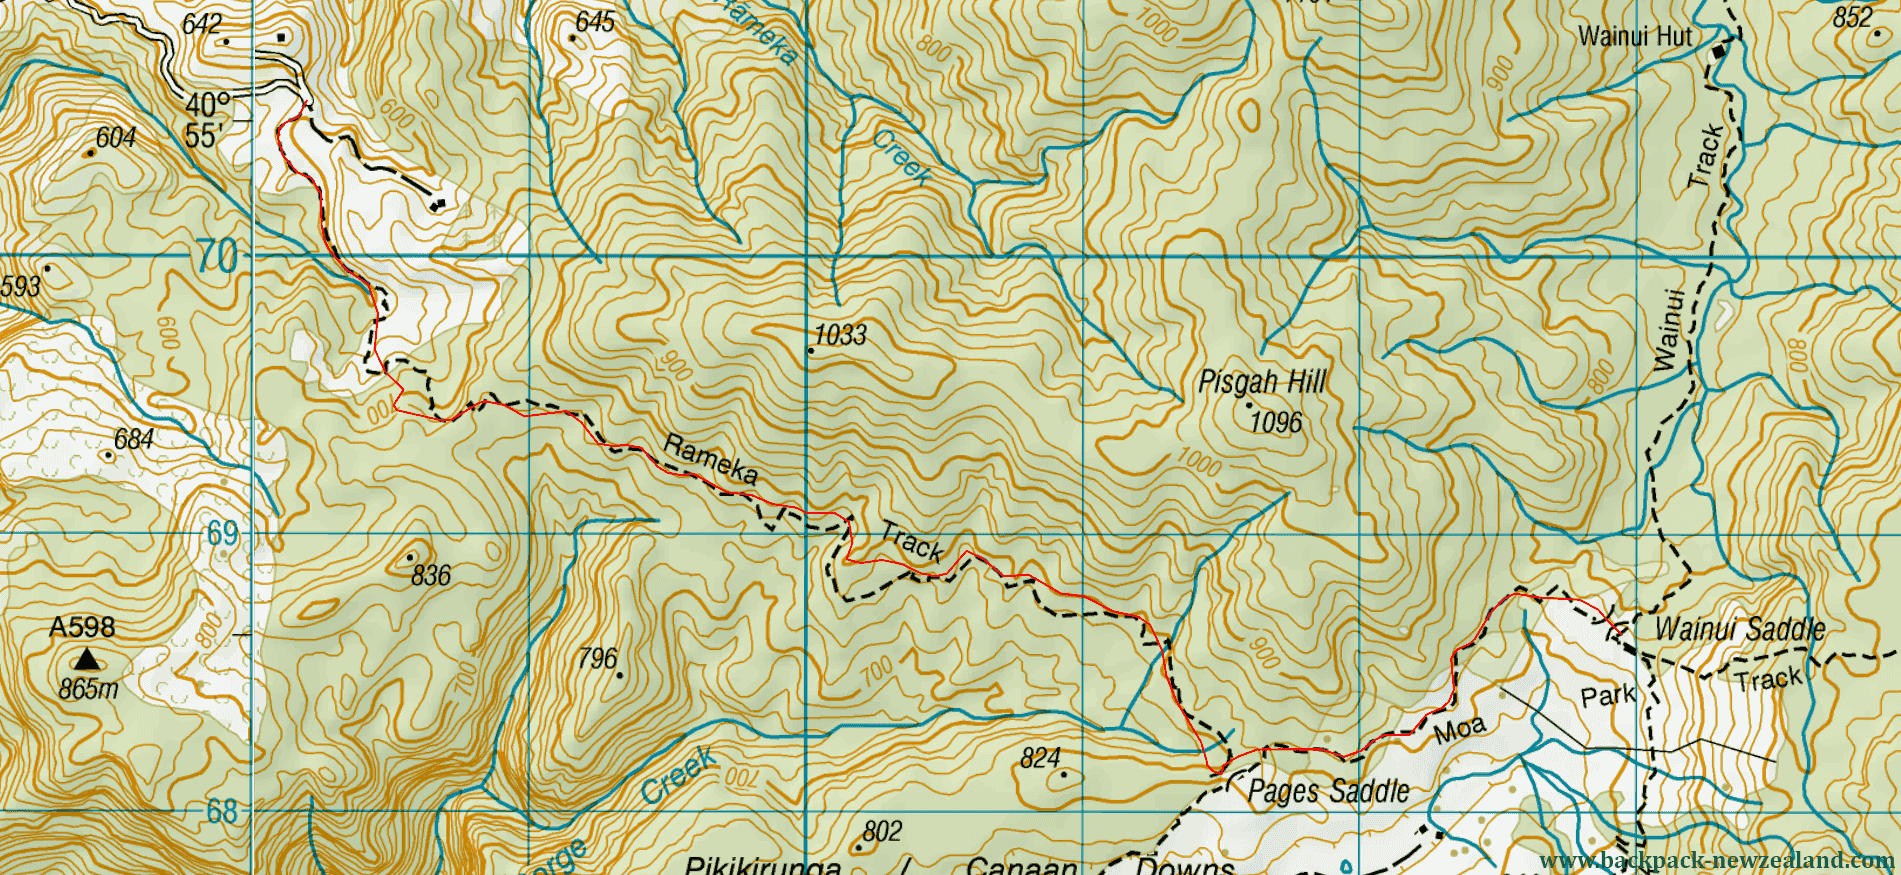 Rameka Track Map - New Zealand Tracks